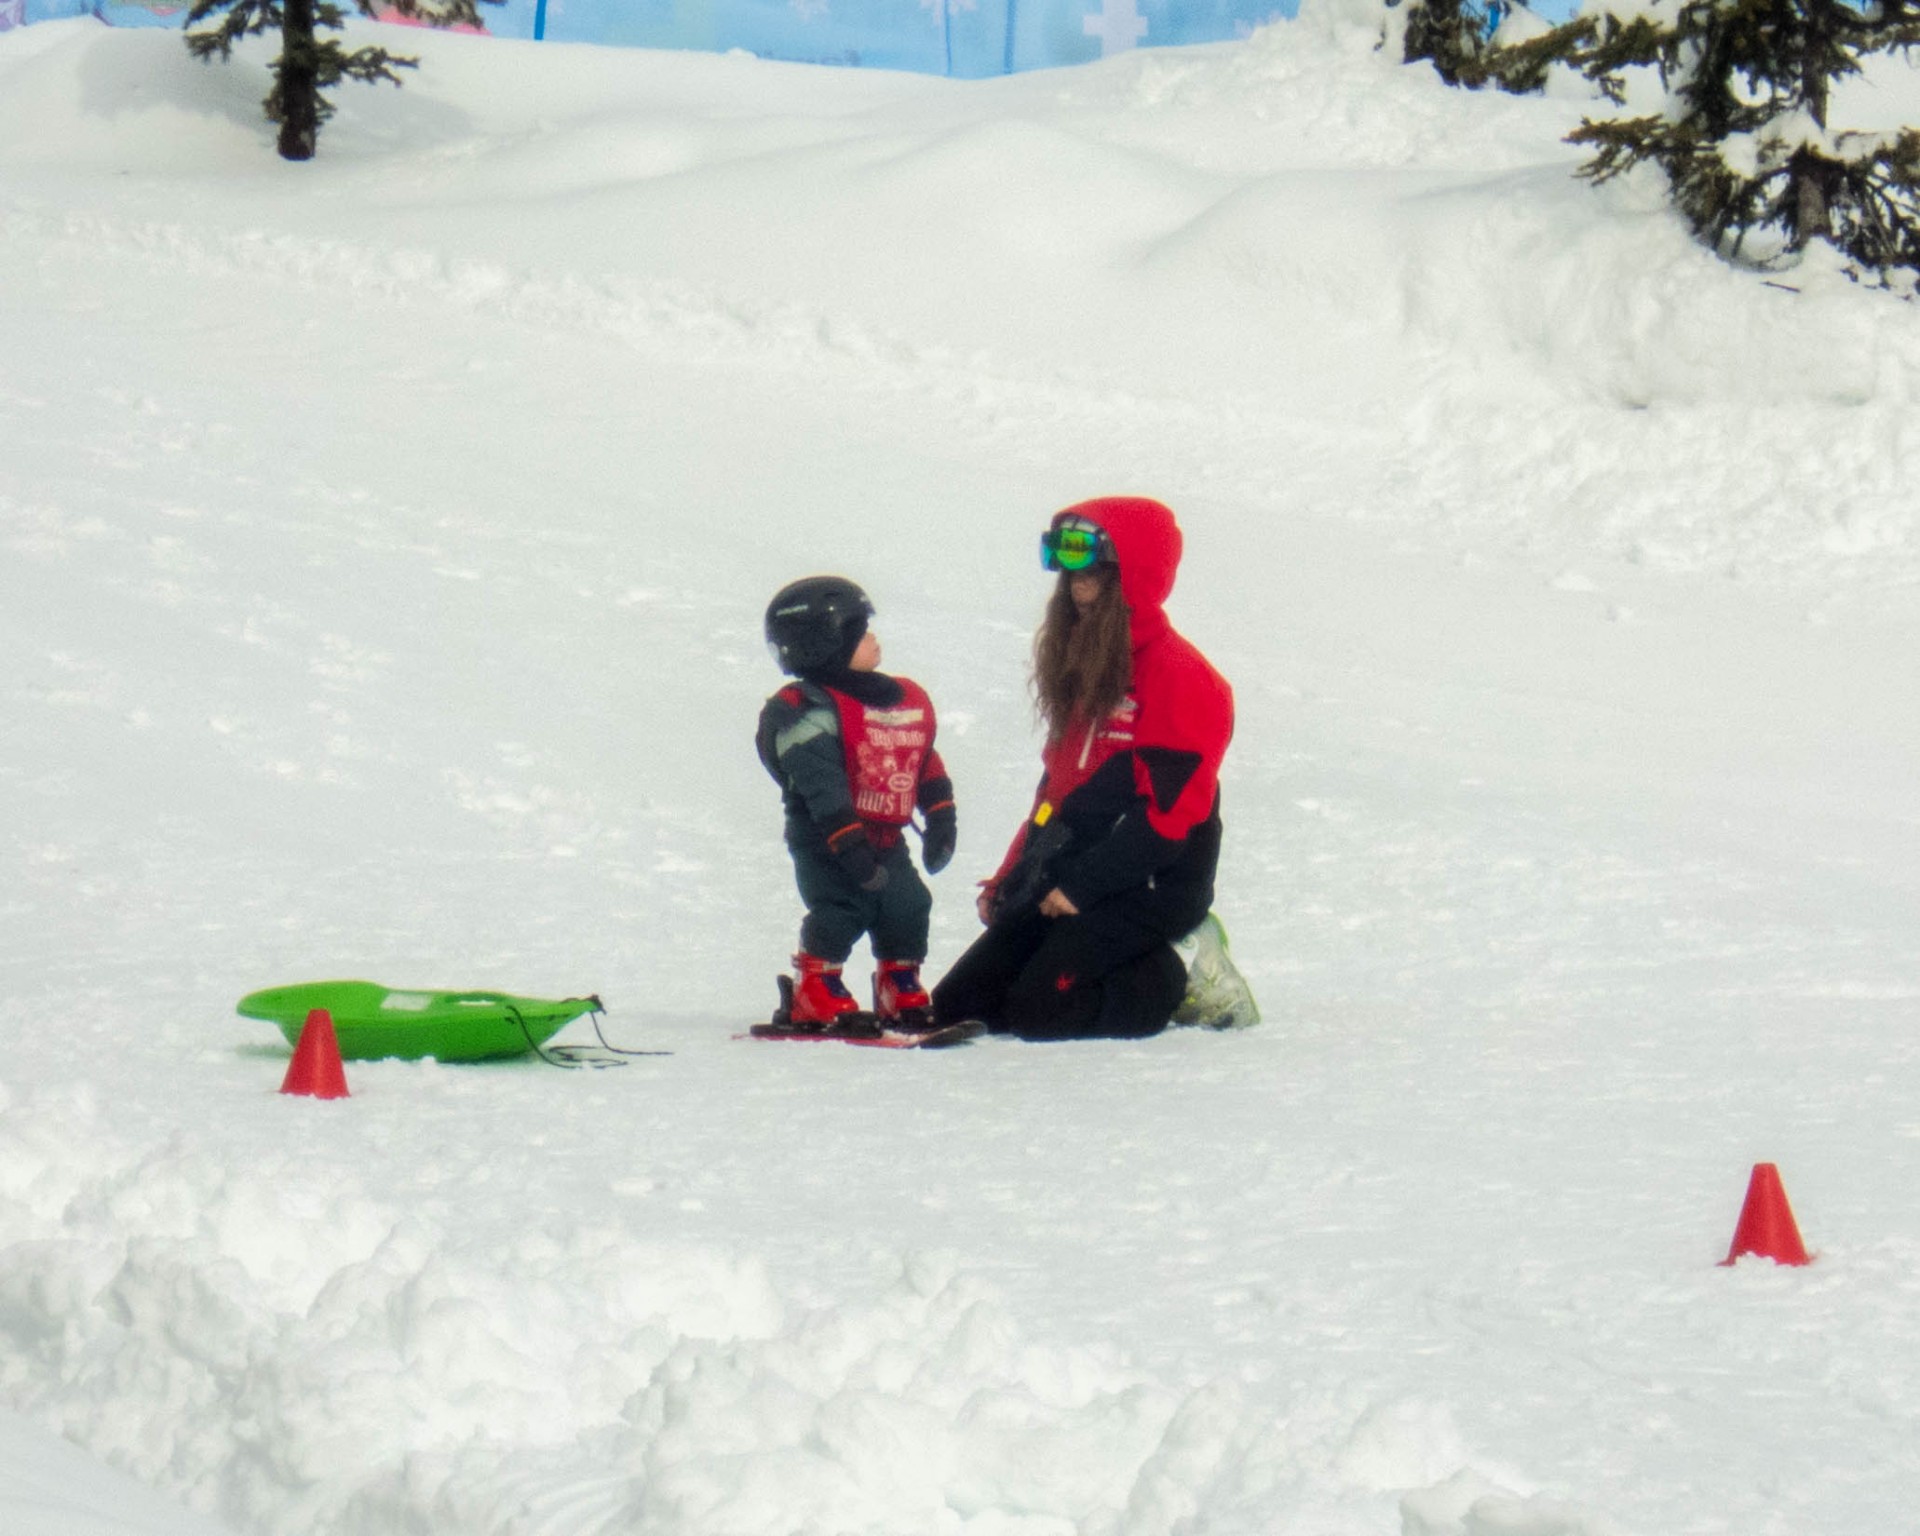 Little boy getting ski lesson - Learning to Ski at Kelowna's Big White